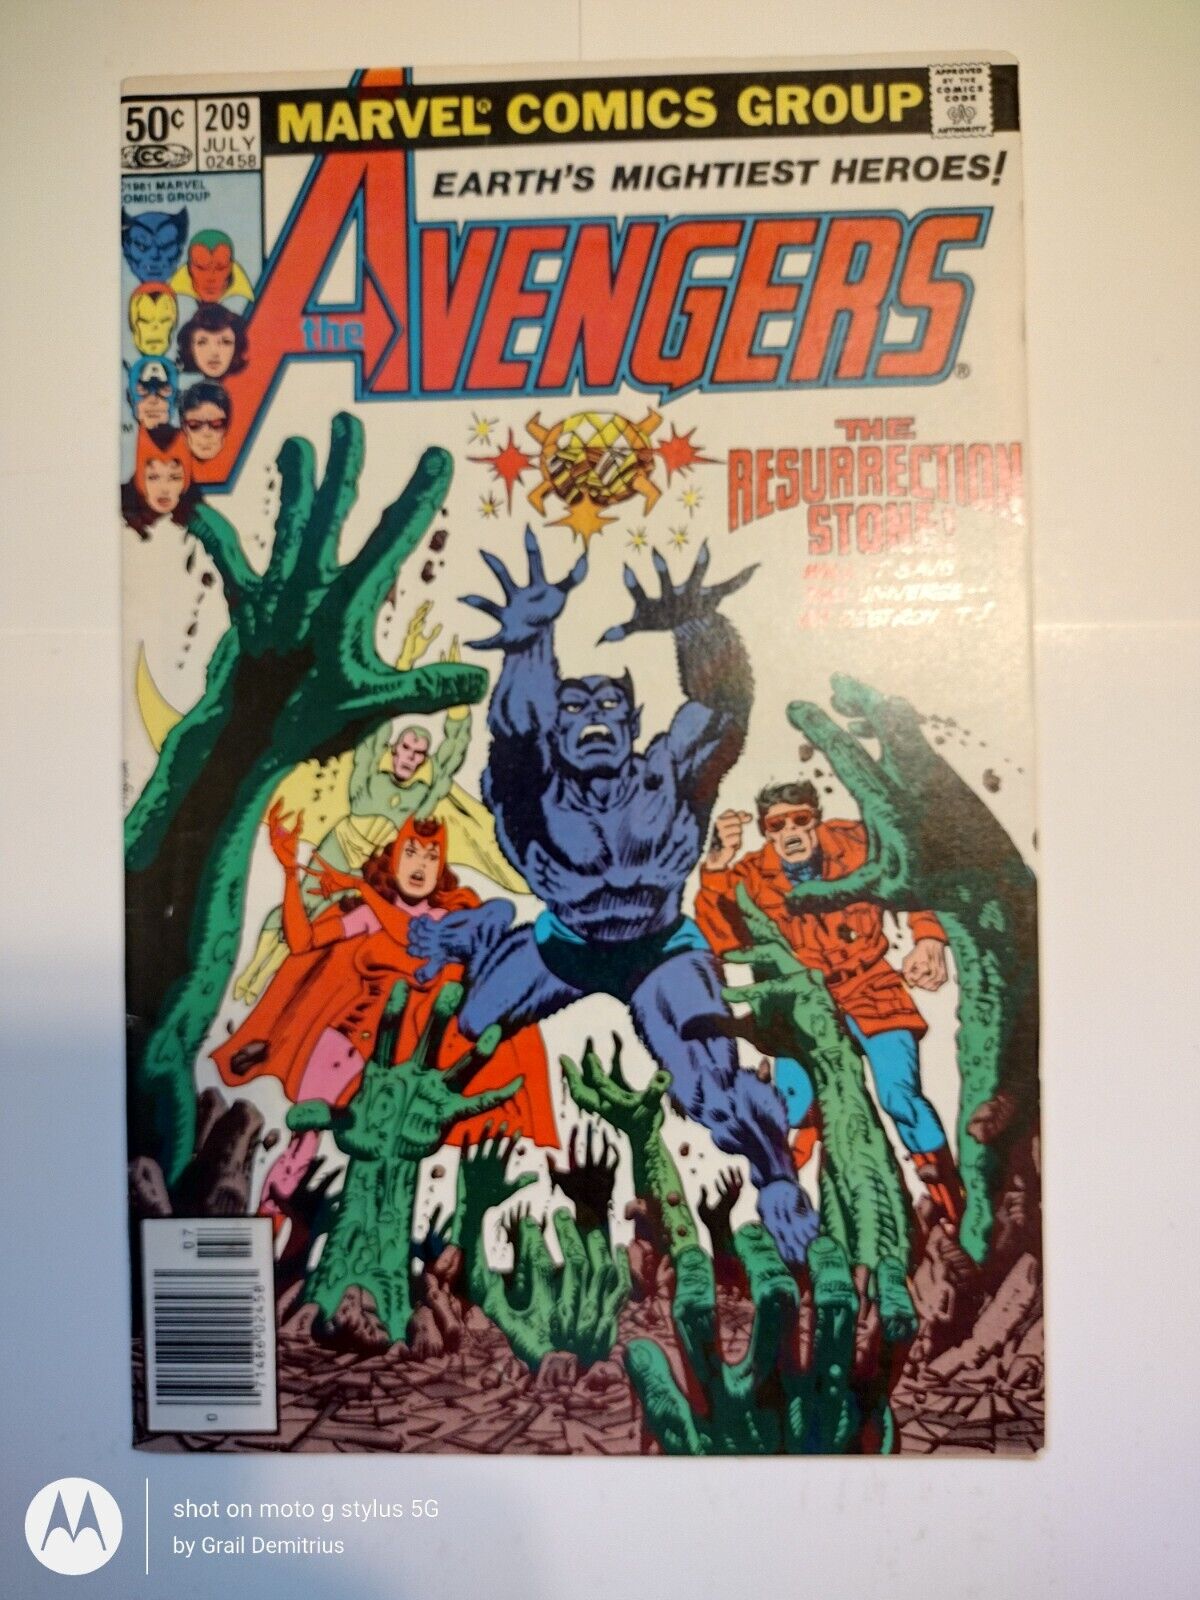 Earths Mightiest Heroes The Avengers #209